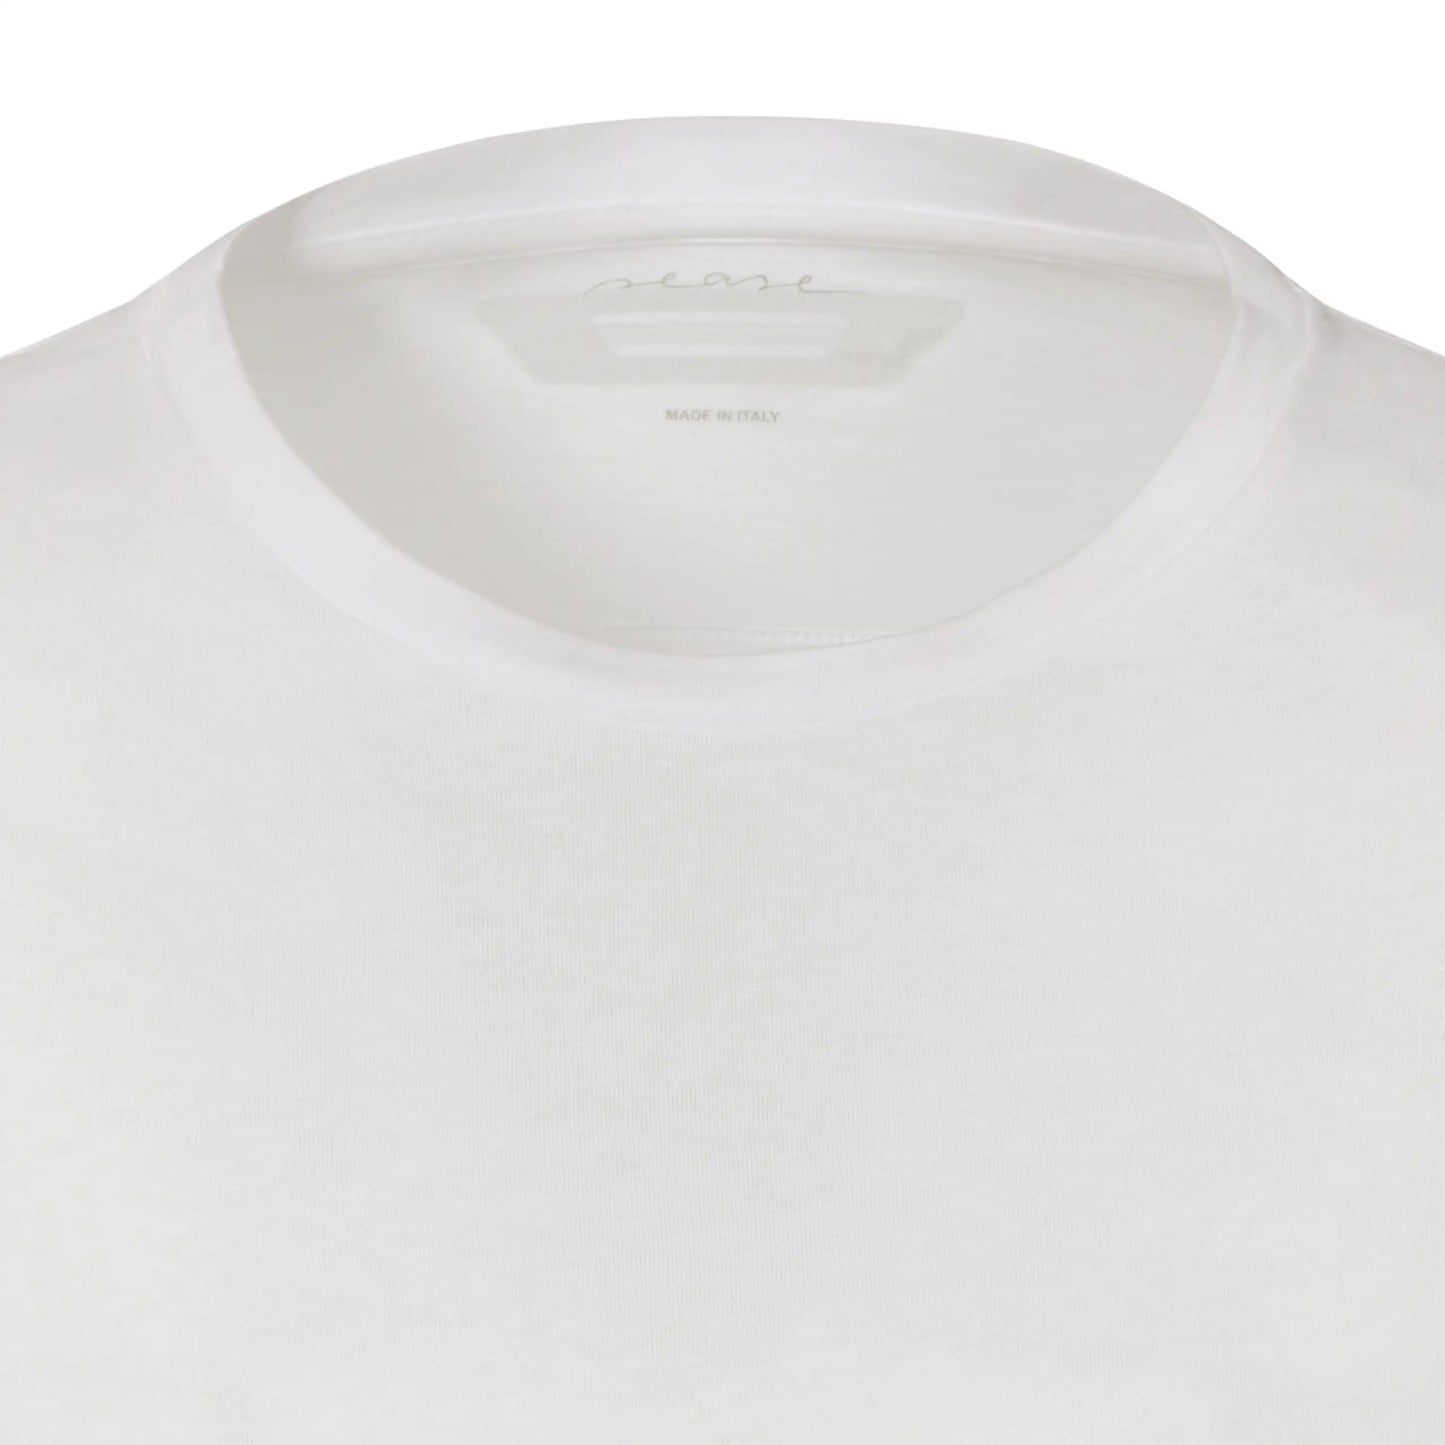 VMG 2.0 Langarm-T-Shirt in warmem Weiß